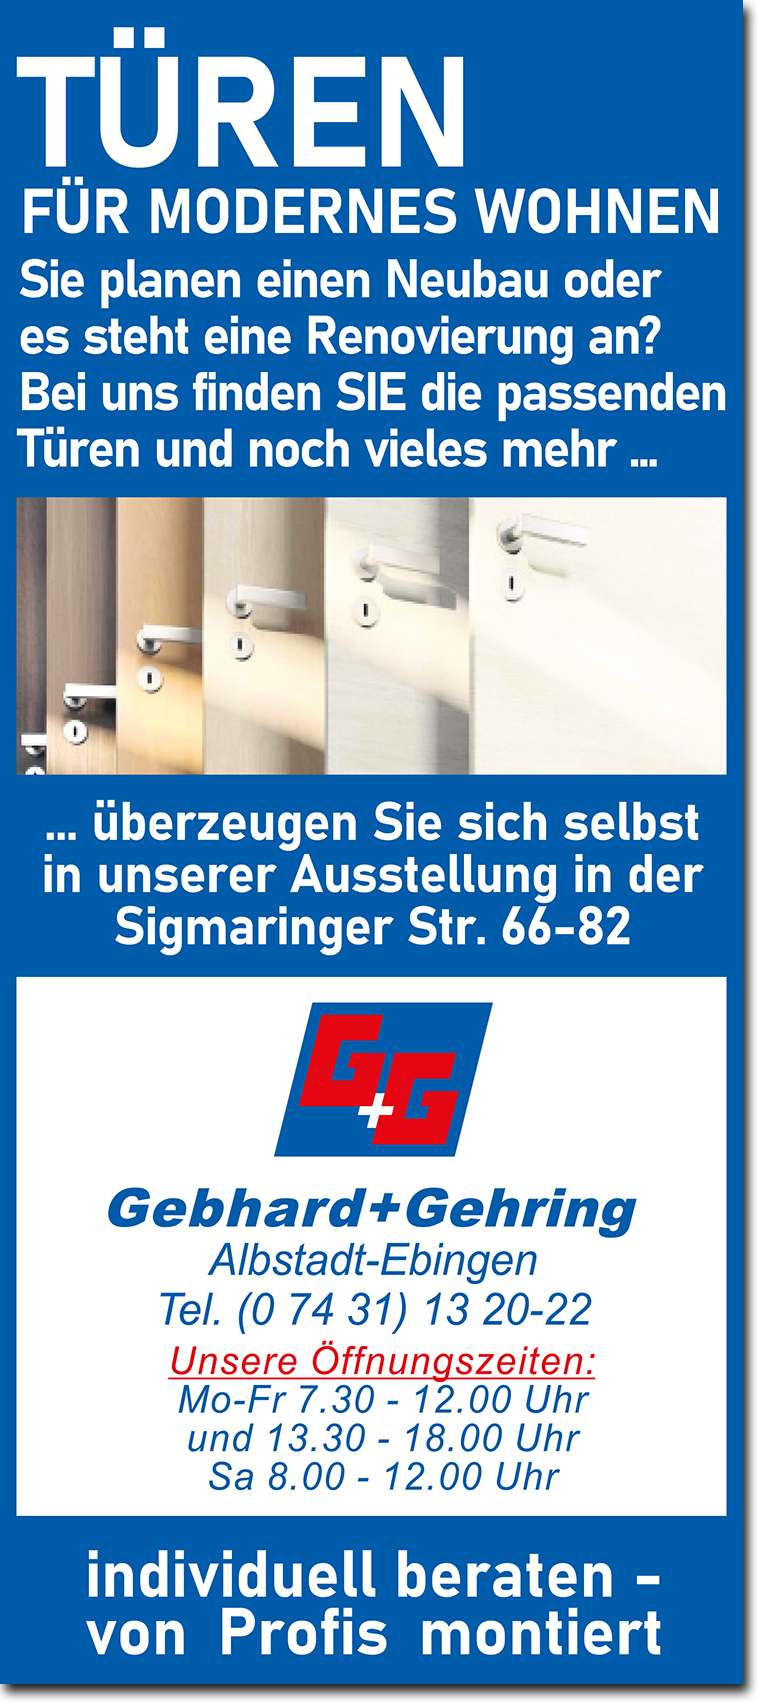 GG Gebhard+Gehring GmbH